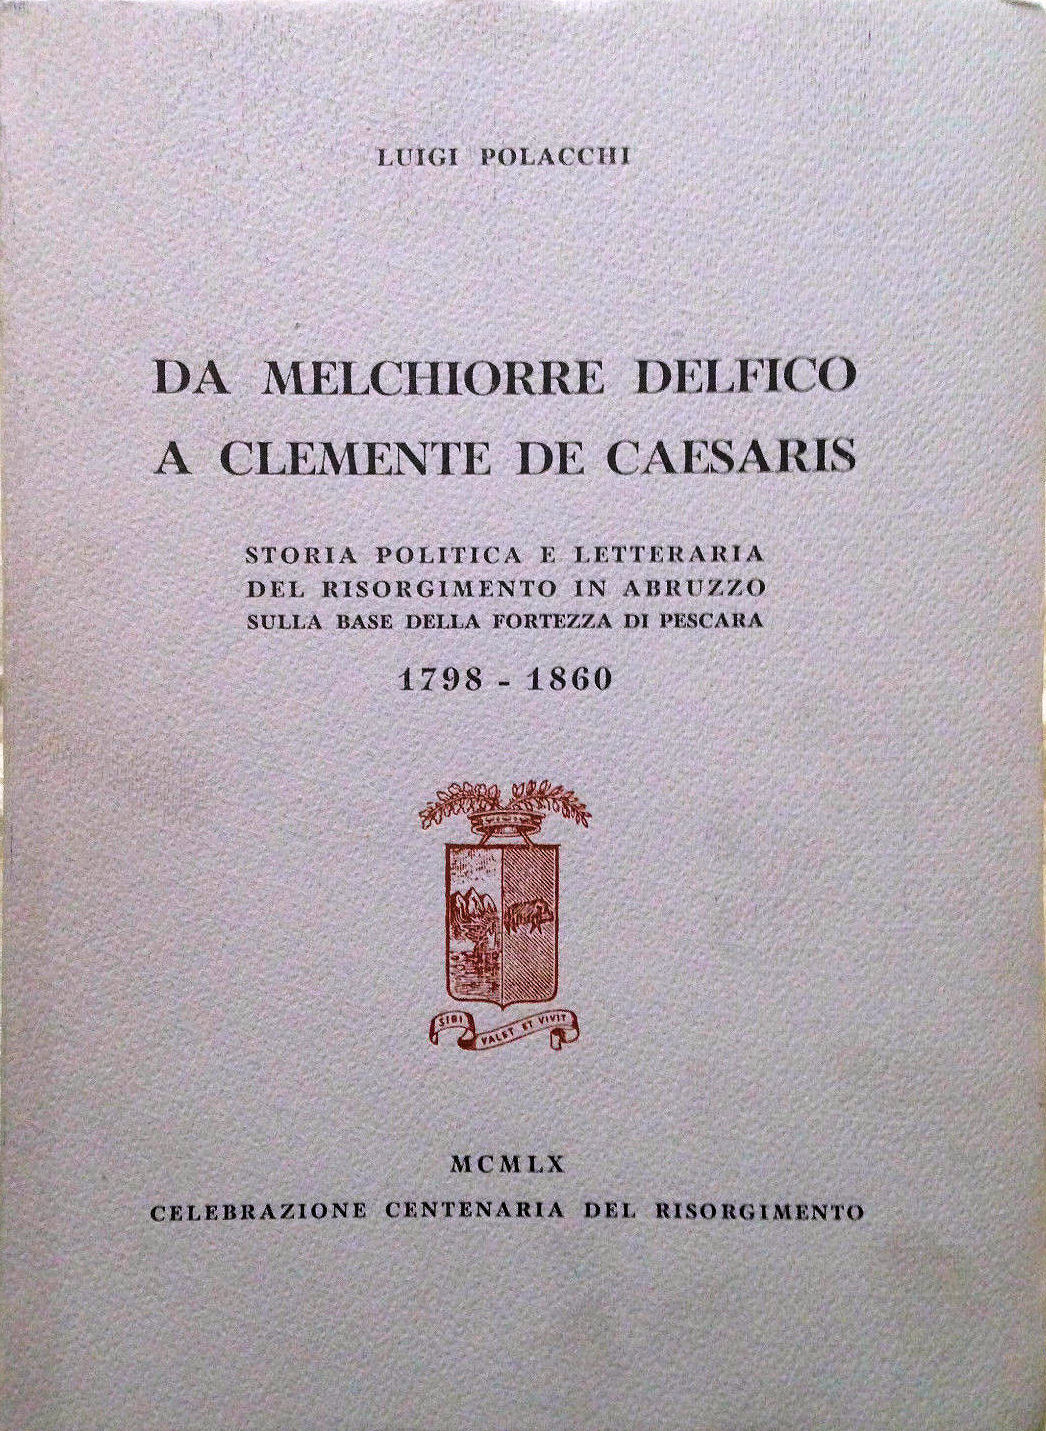 1961 - Da Melchiorre Delfico a Clemente De Caesaris